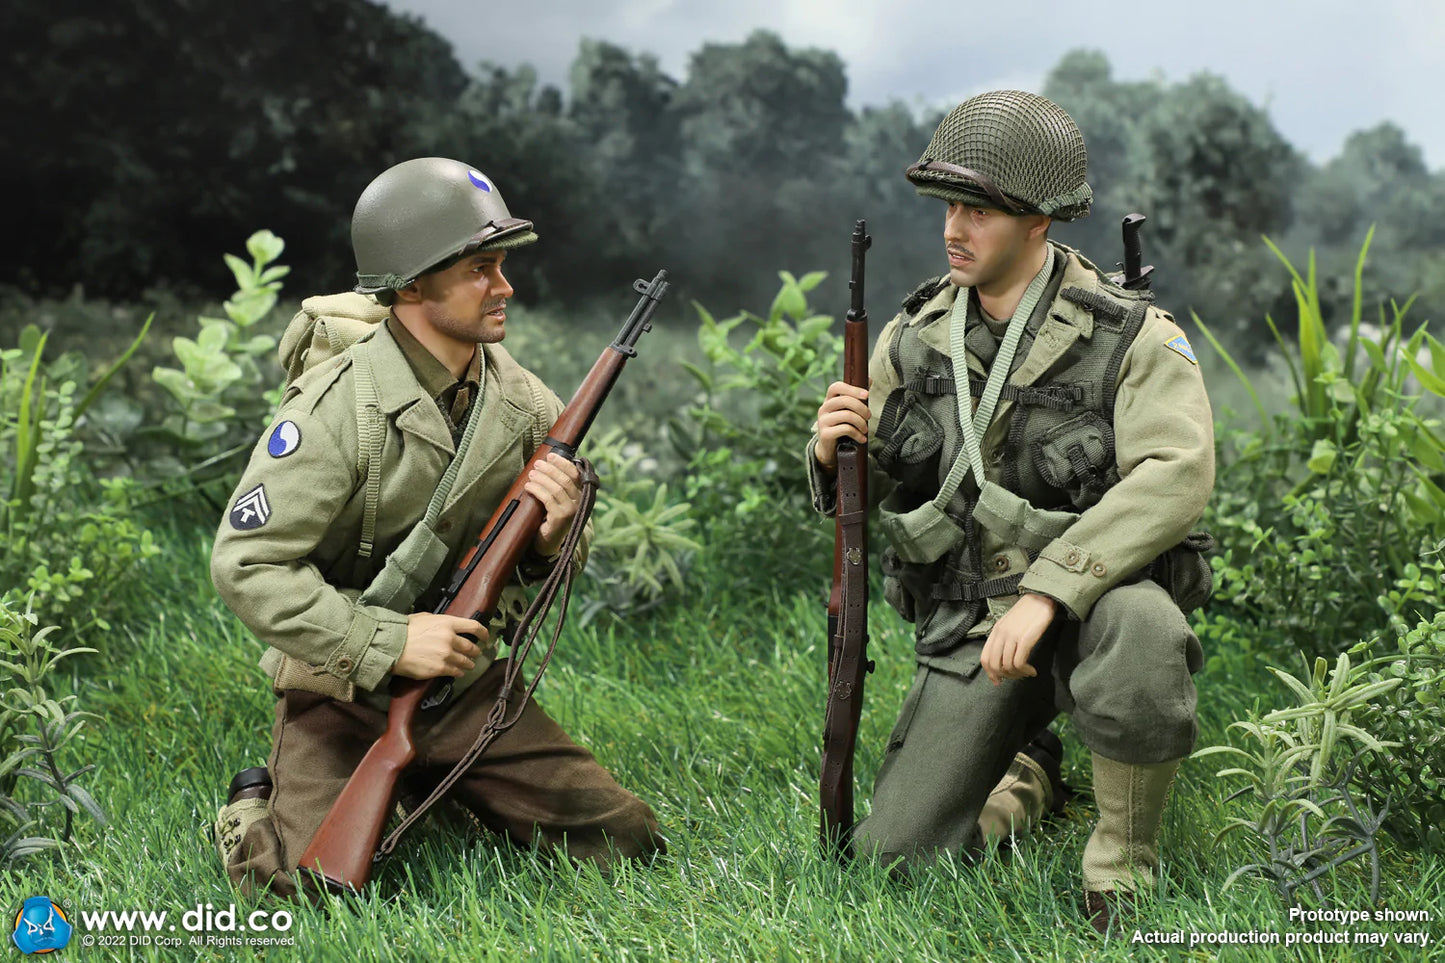 Pedido Figura Corporal Upham - WWII US 29th Infantry Technician marca DID A80156 escala 1/6